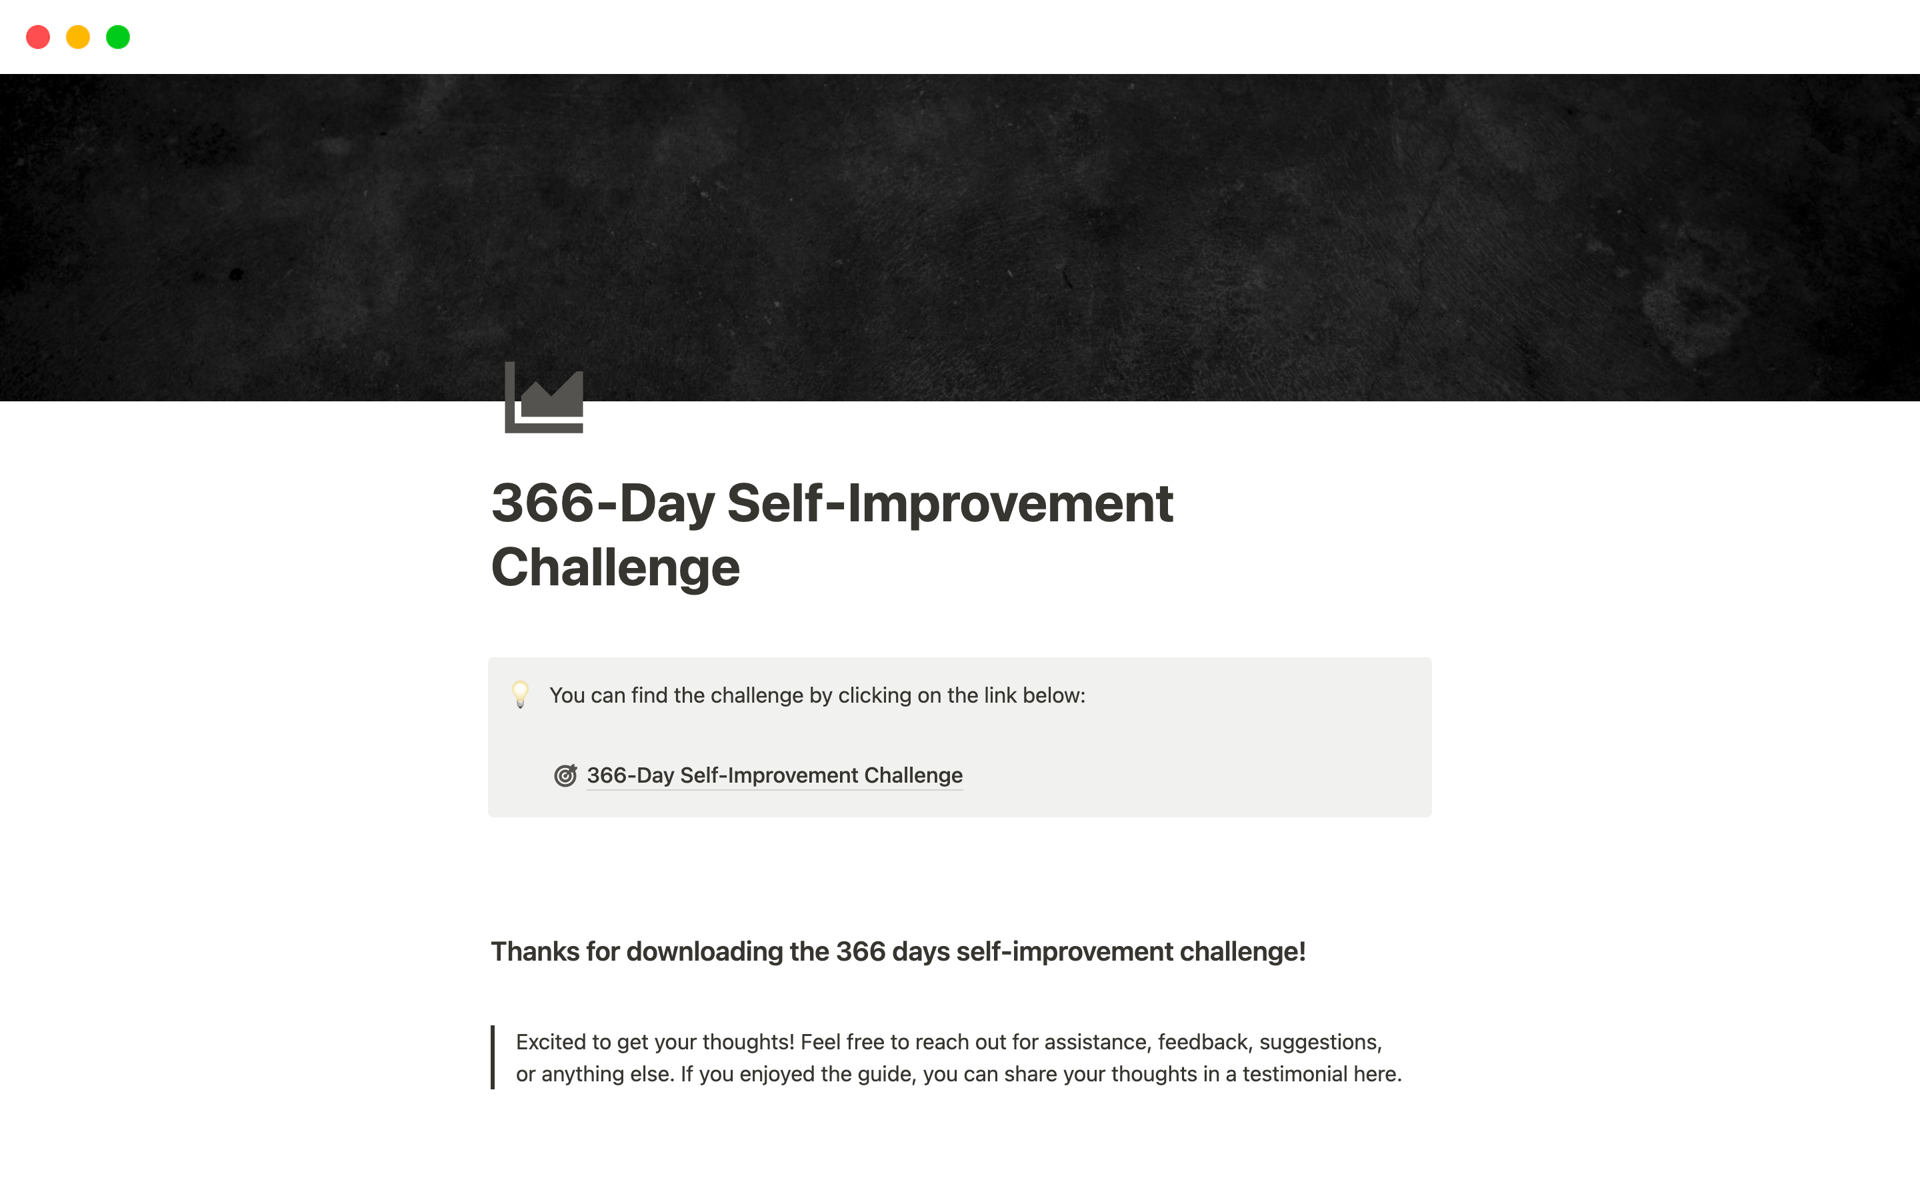 Vista previa de plantilla para 366-Day Self-Improvement Challenge